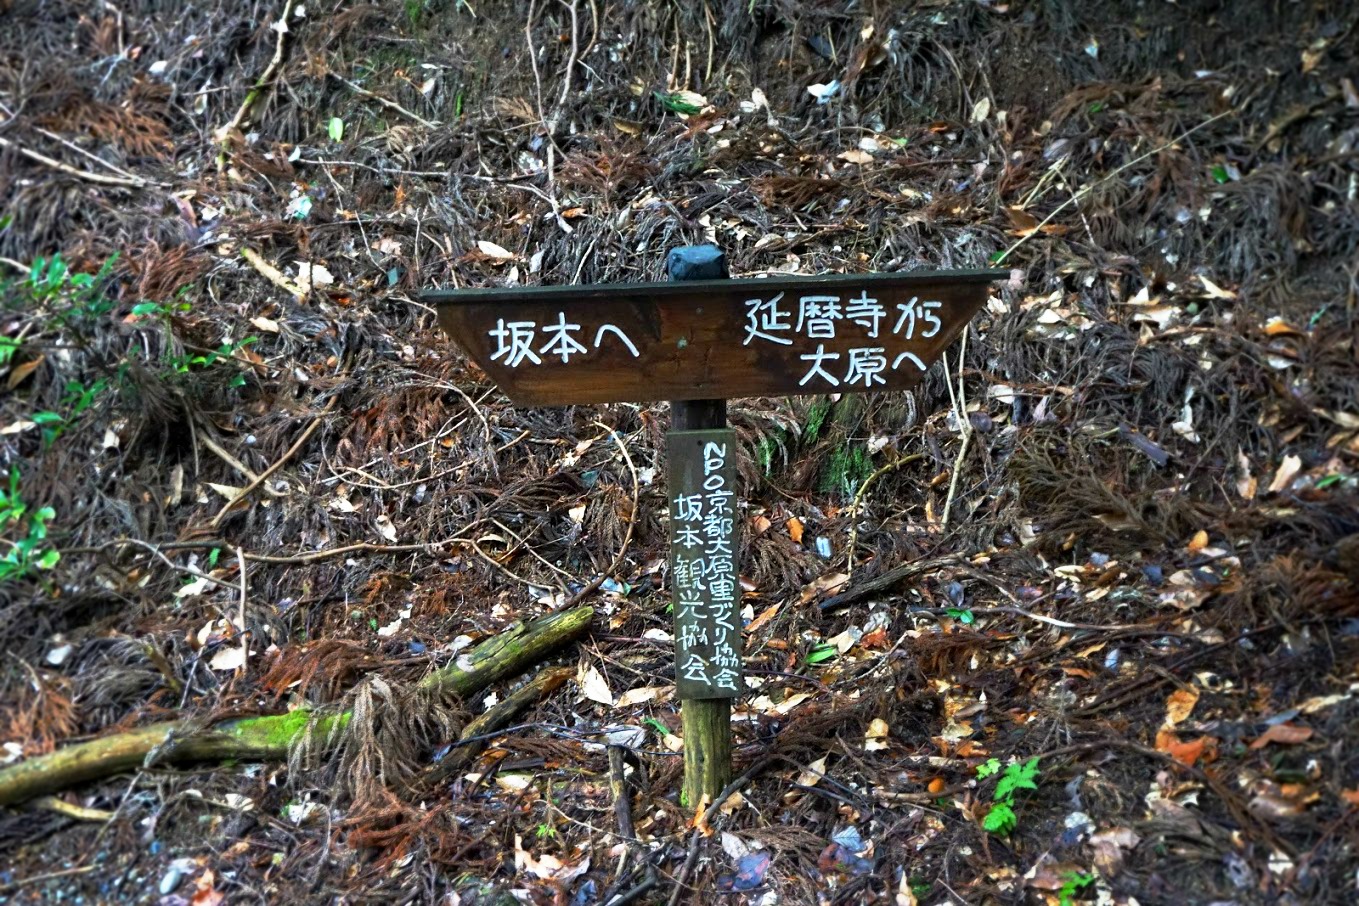 Hiking down Mount Hiei